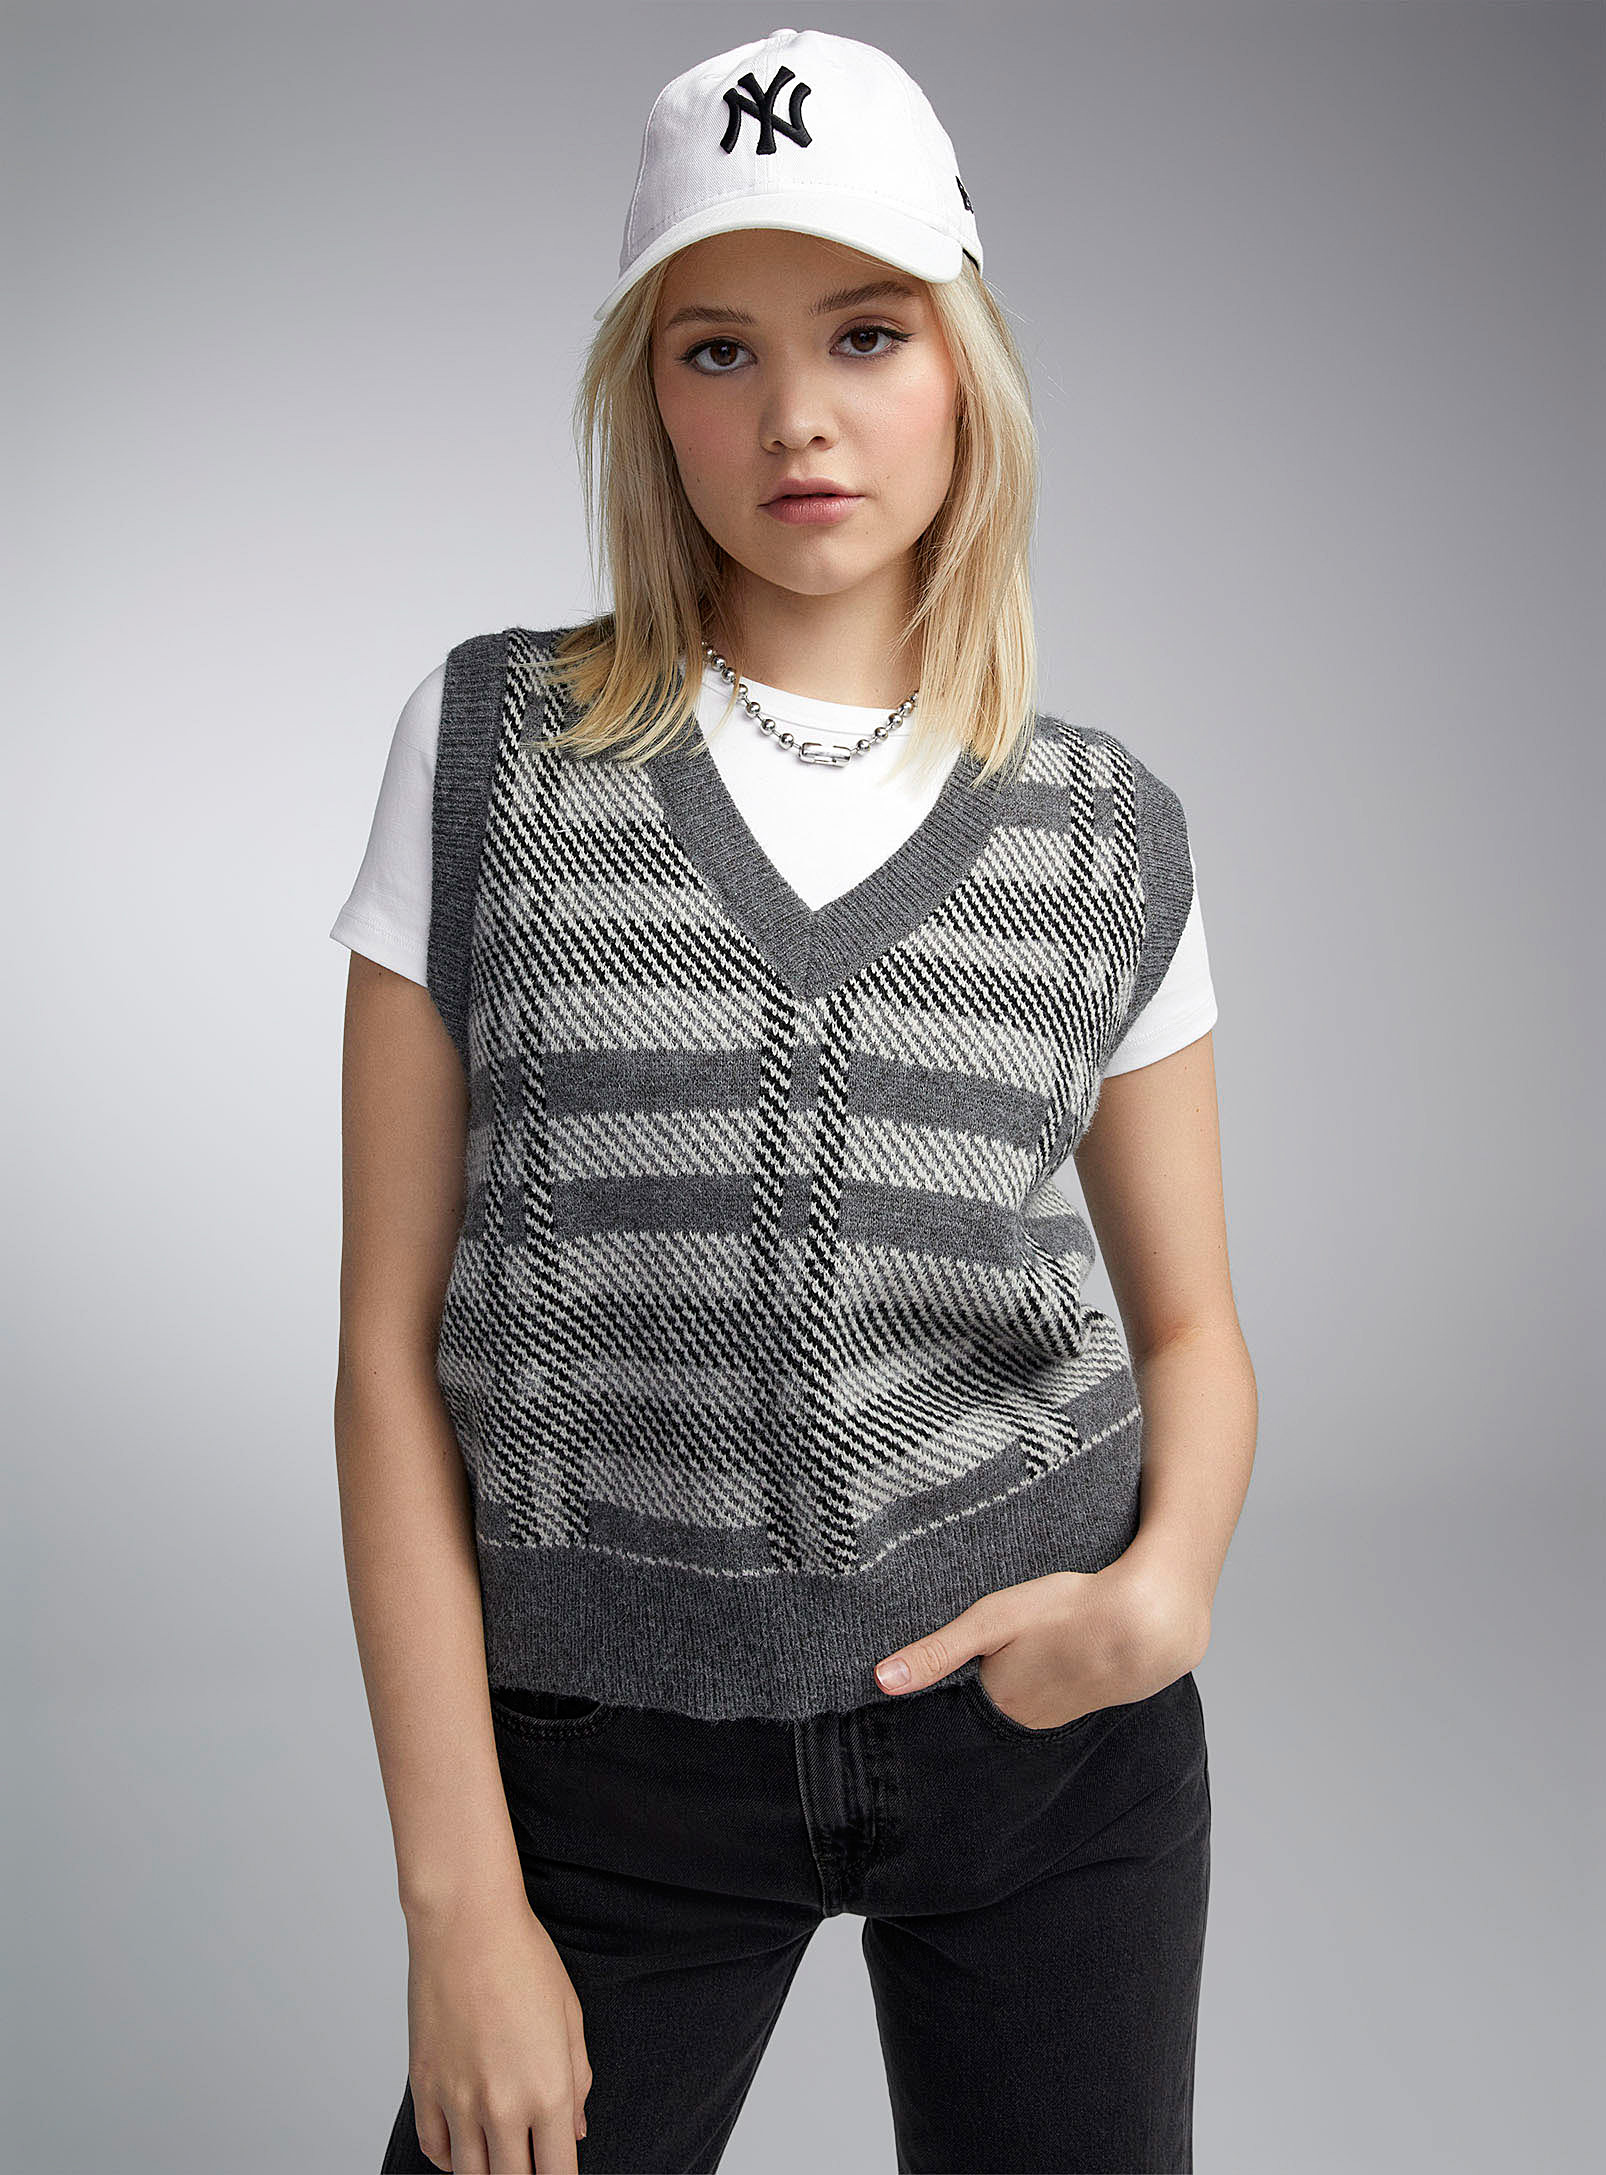 Twik - Women's Hatched checkers sweater vest